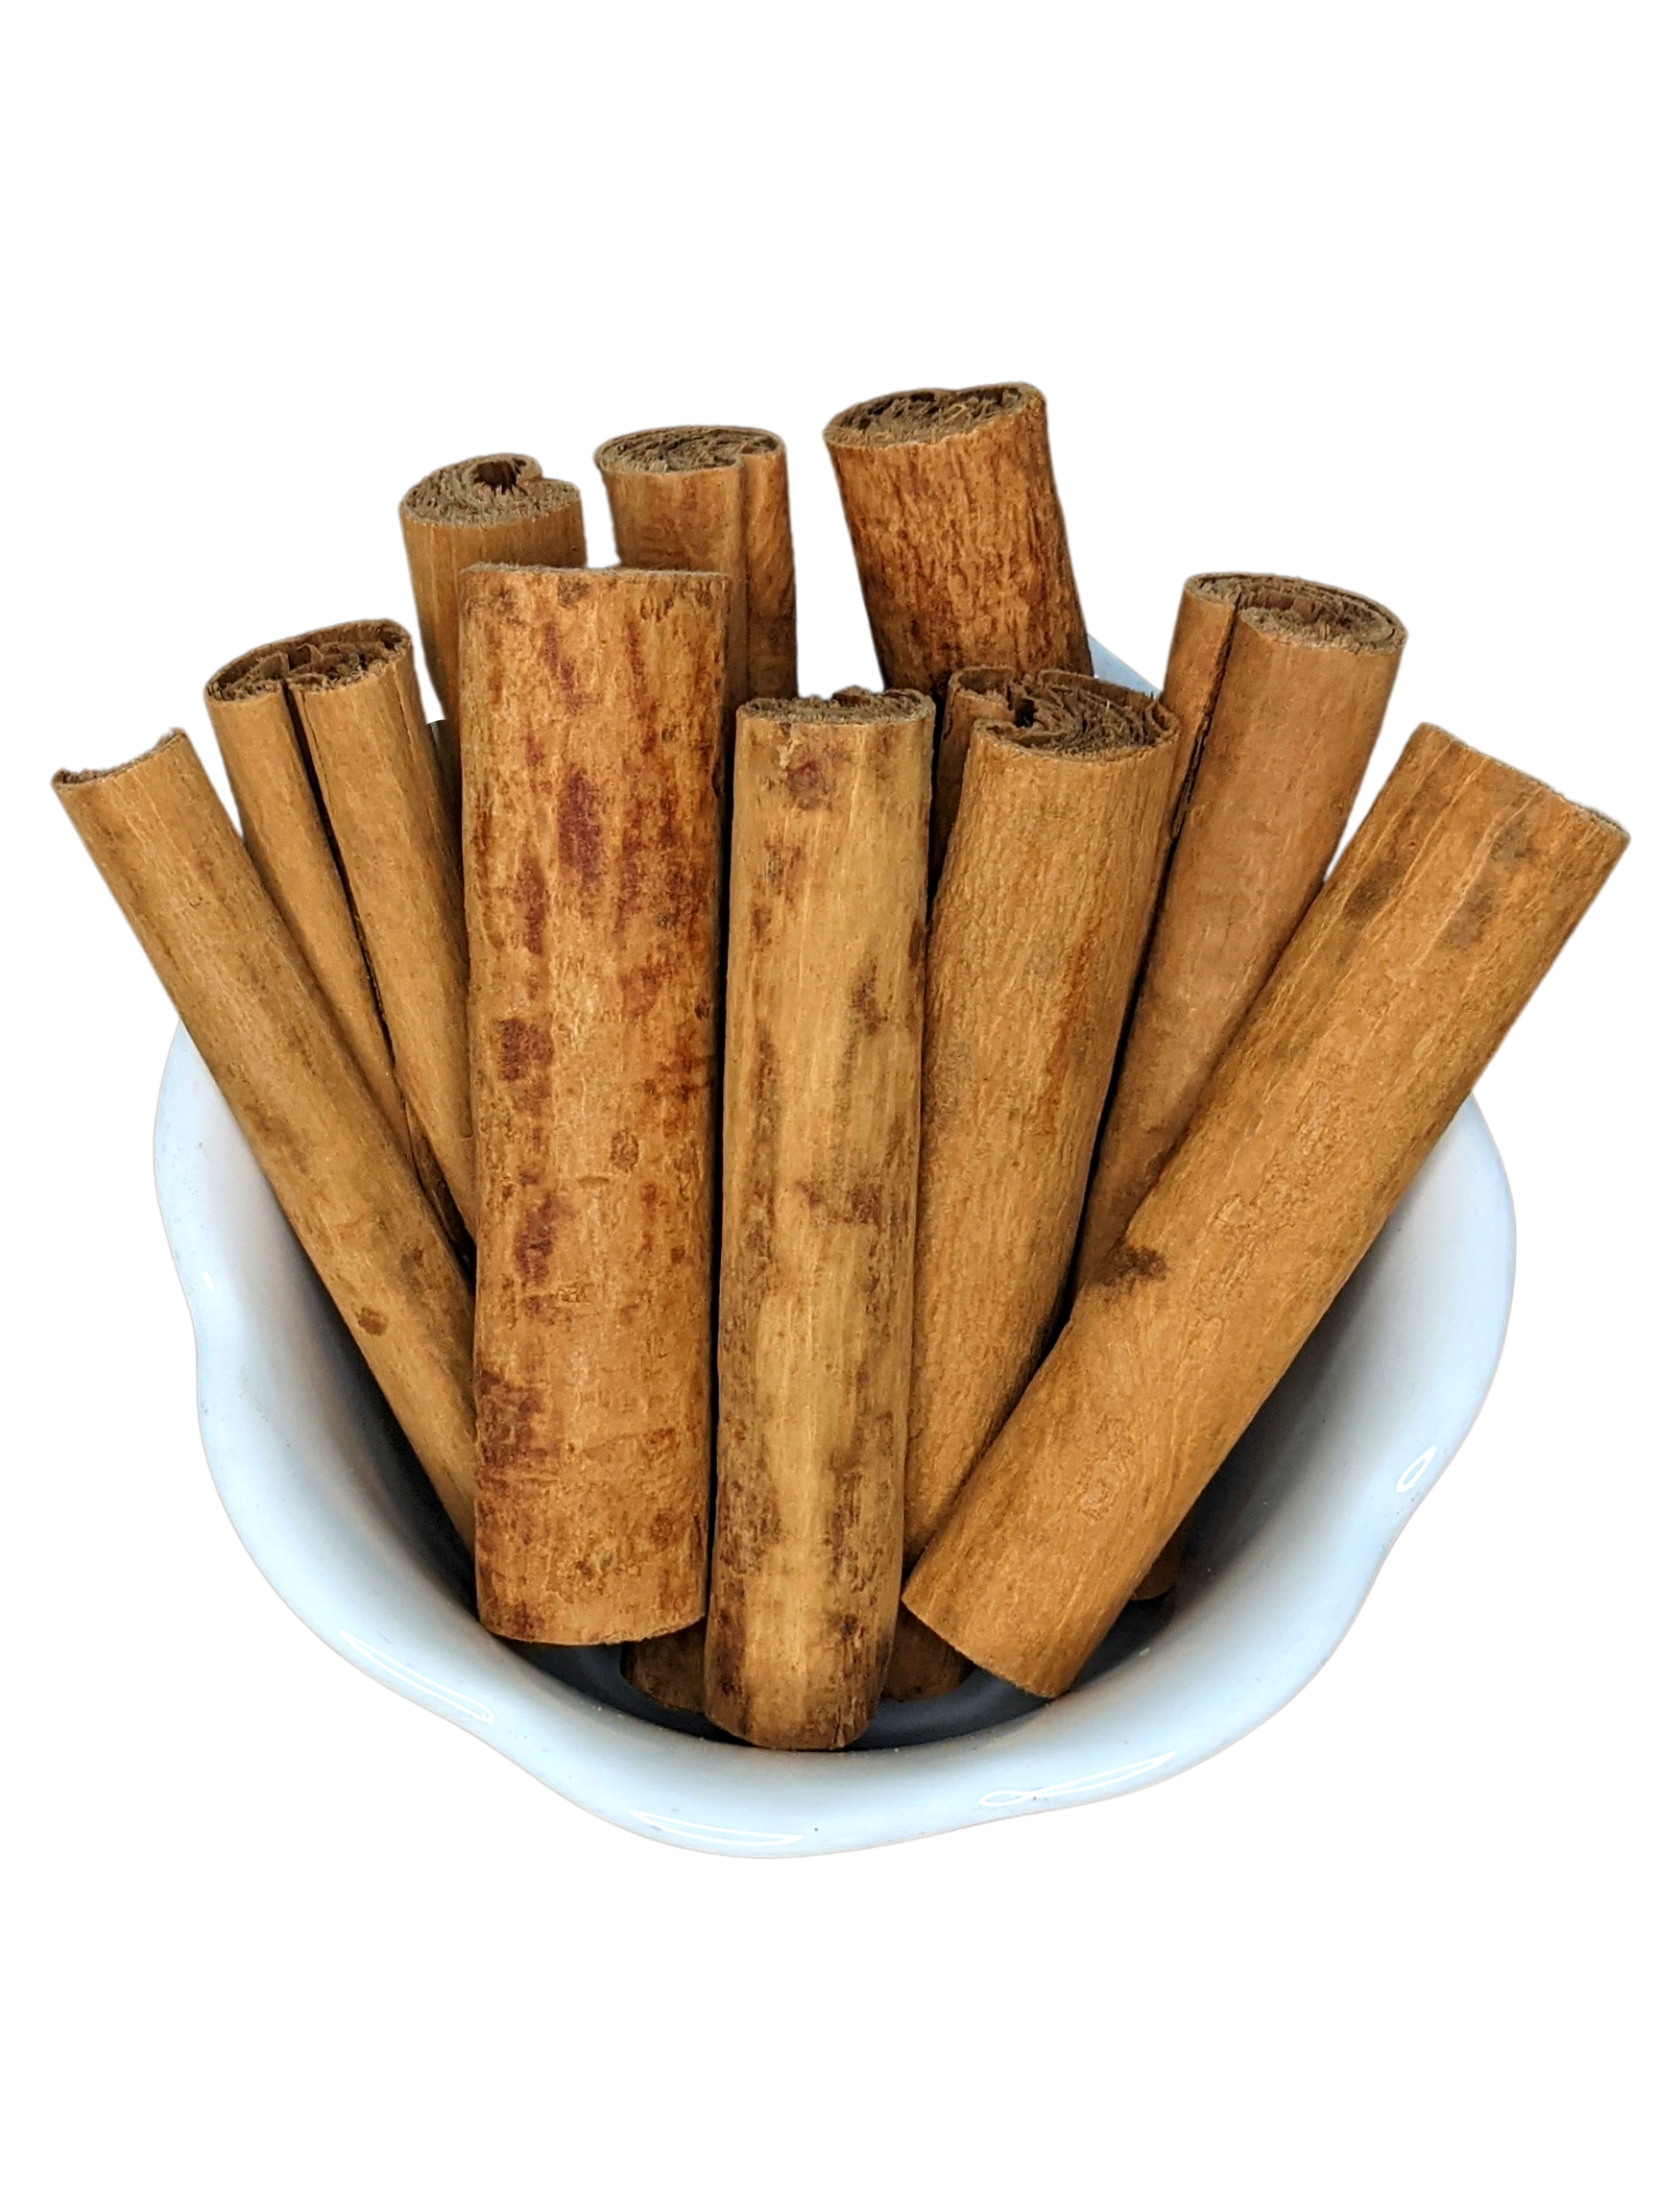 True Cinnamon Sticks